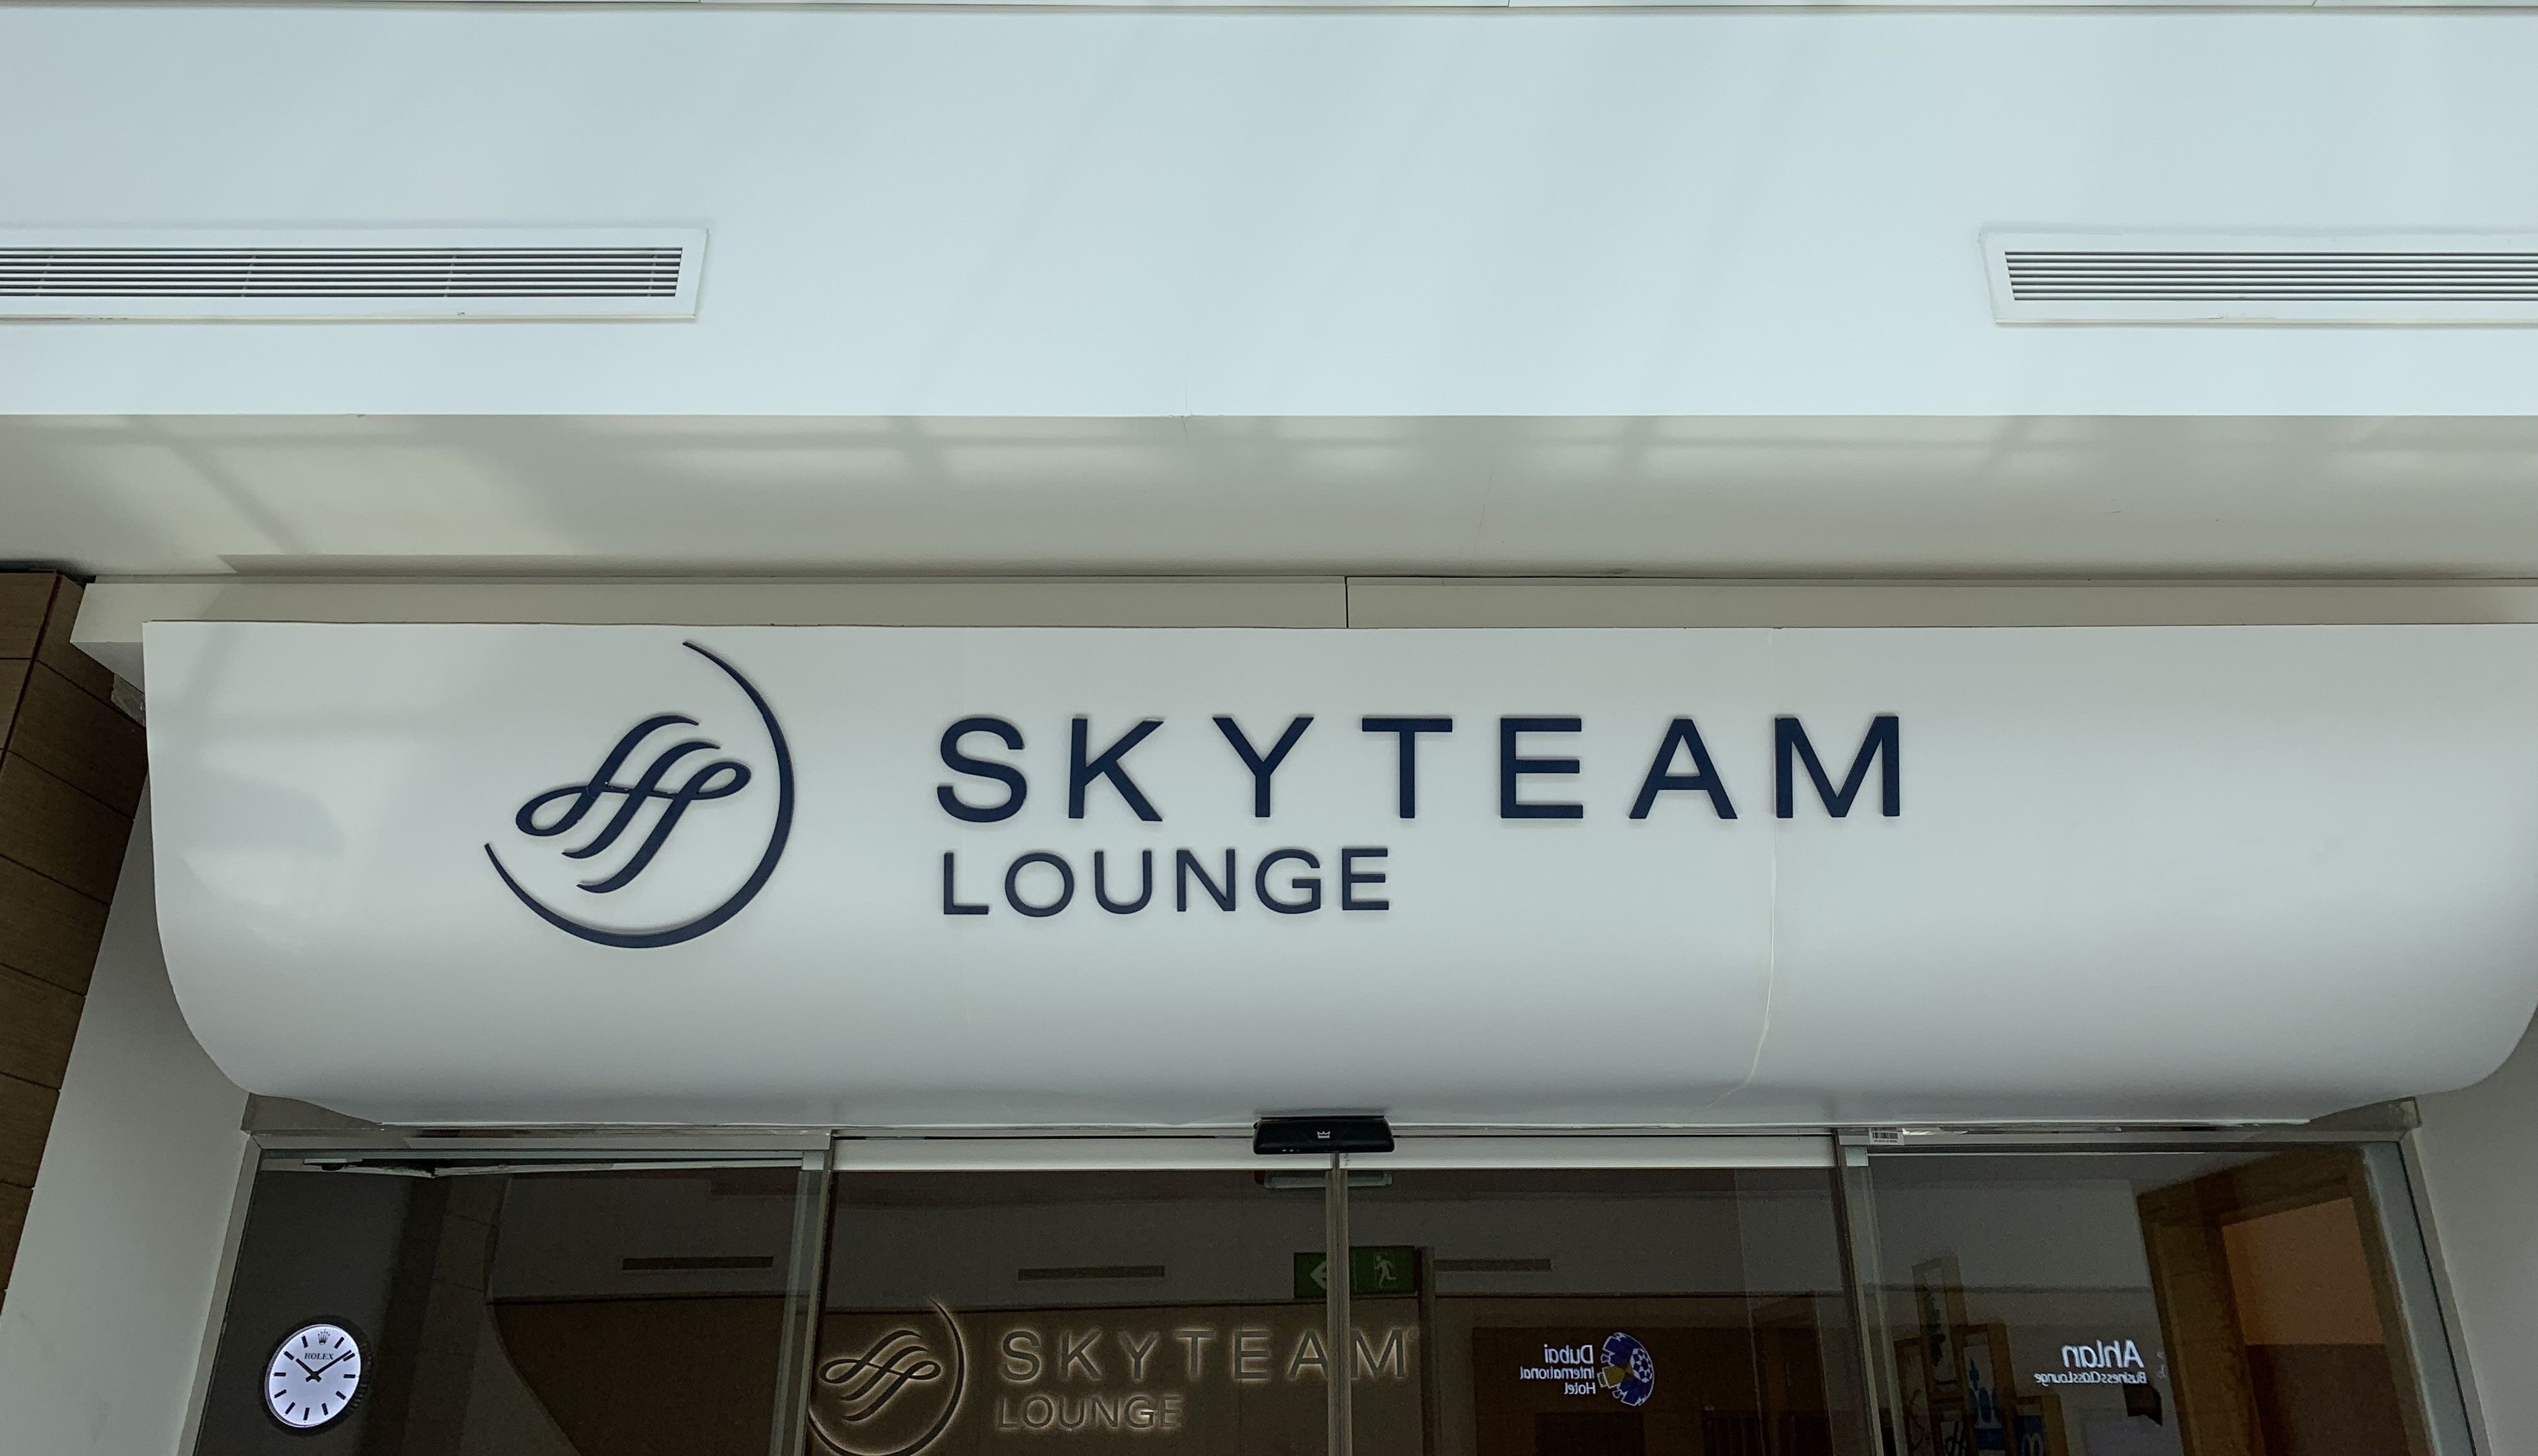 Just outside the SkyTeam Lounge at Dubai International Airport Terminal 1.